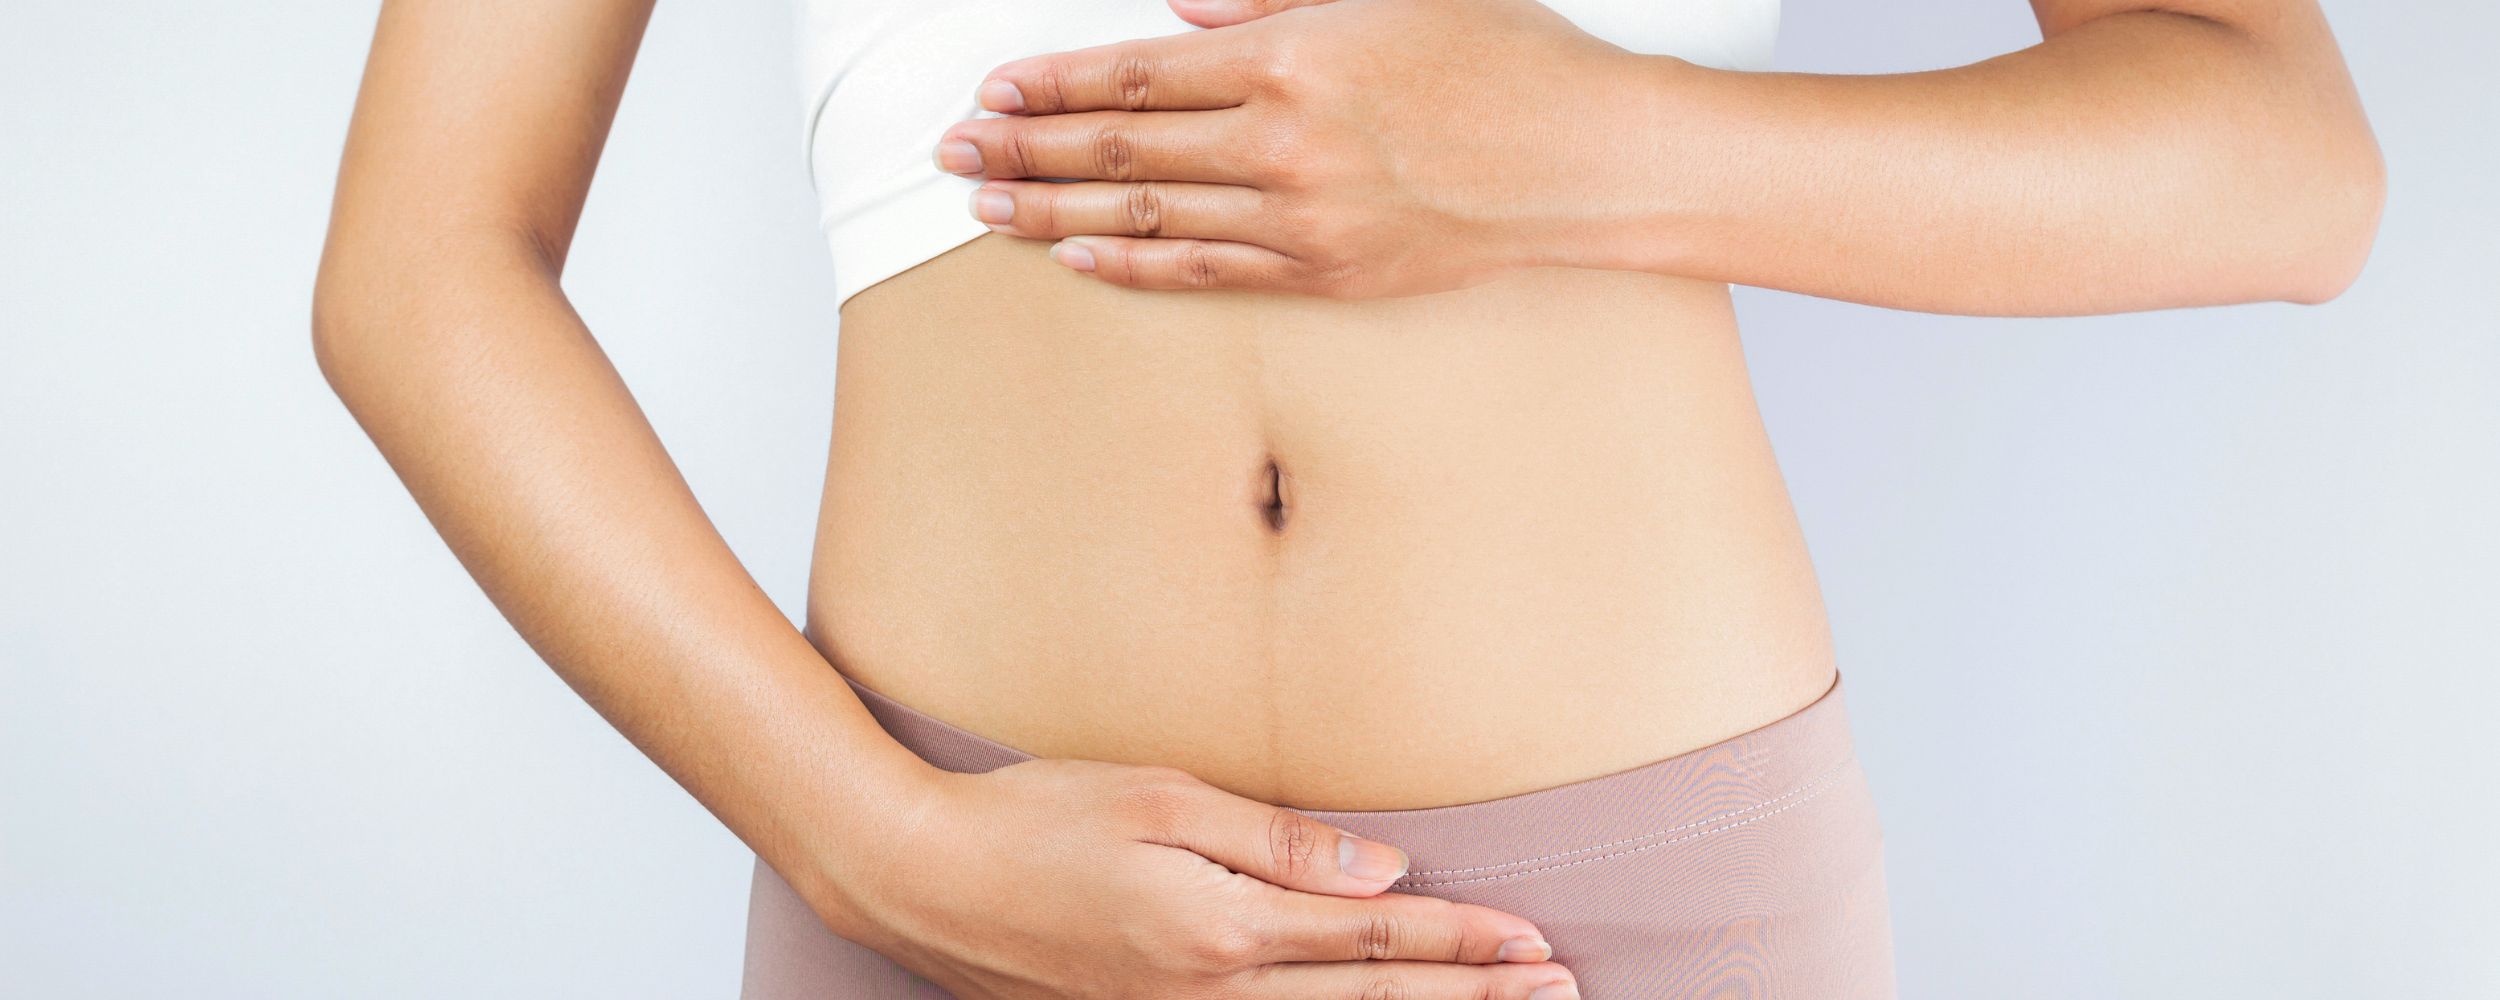 New insights on the impact of gut microbiota on premenstrual